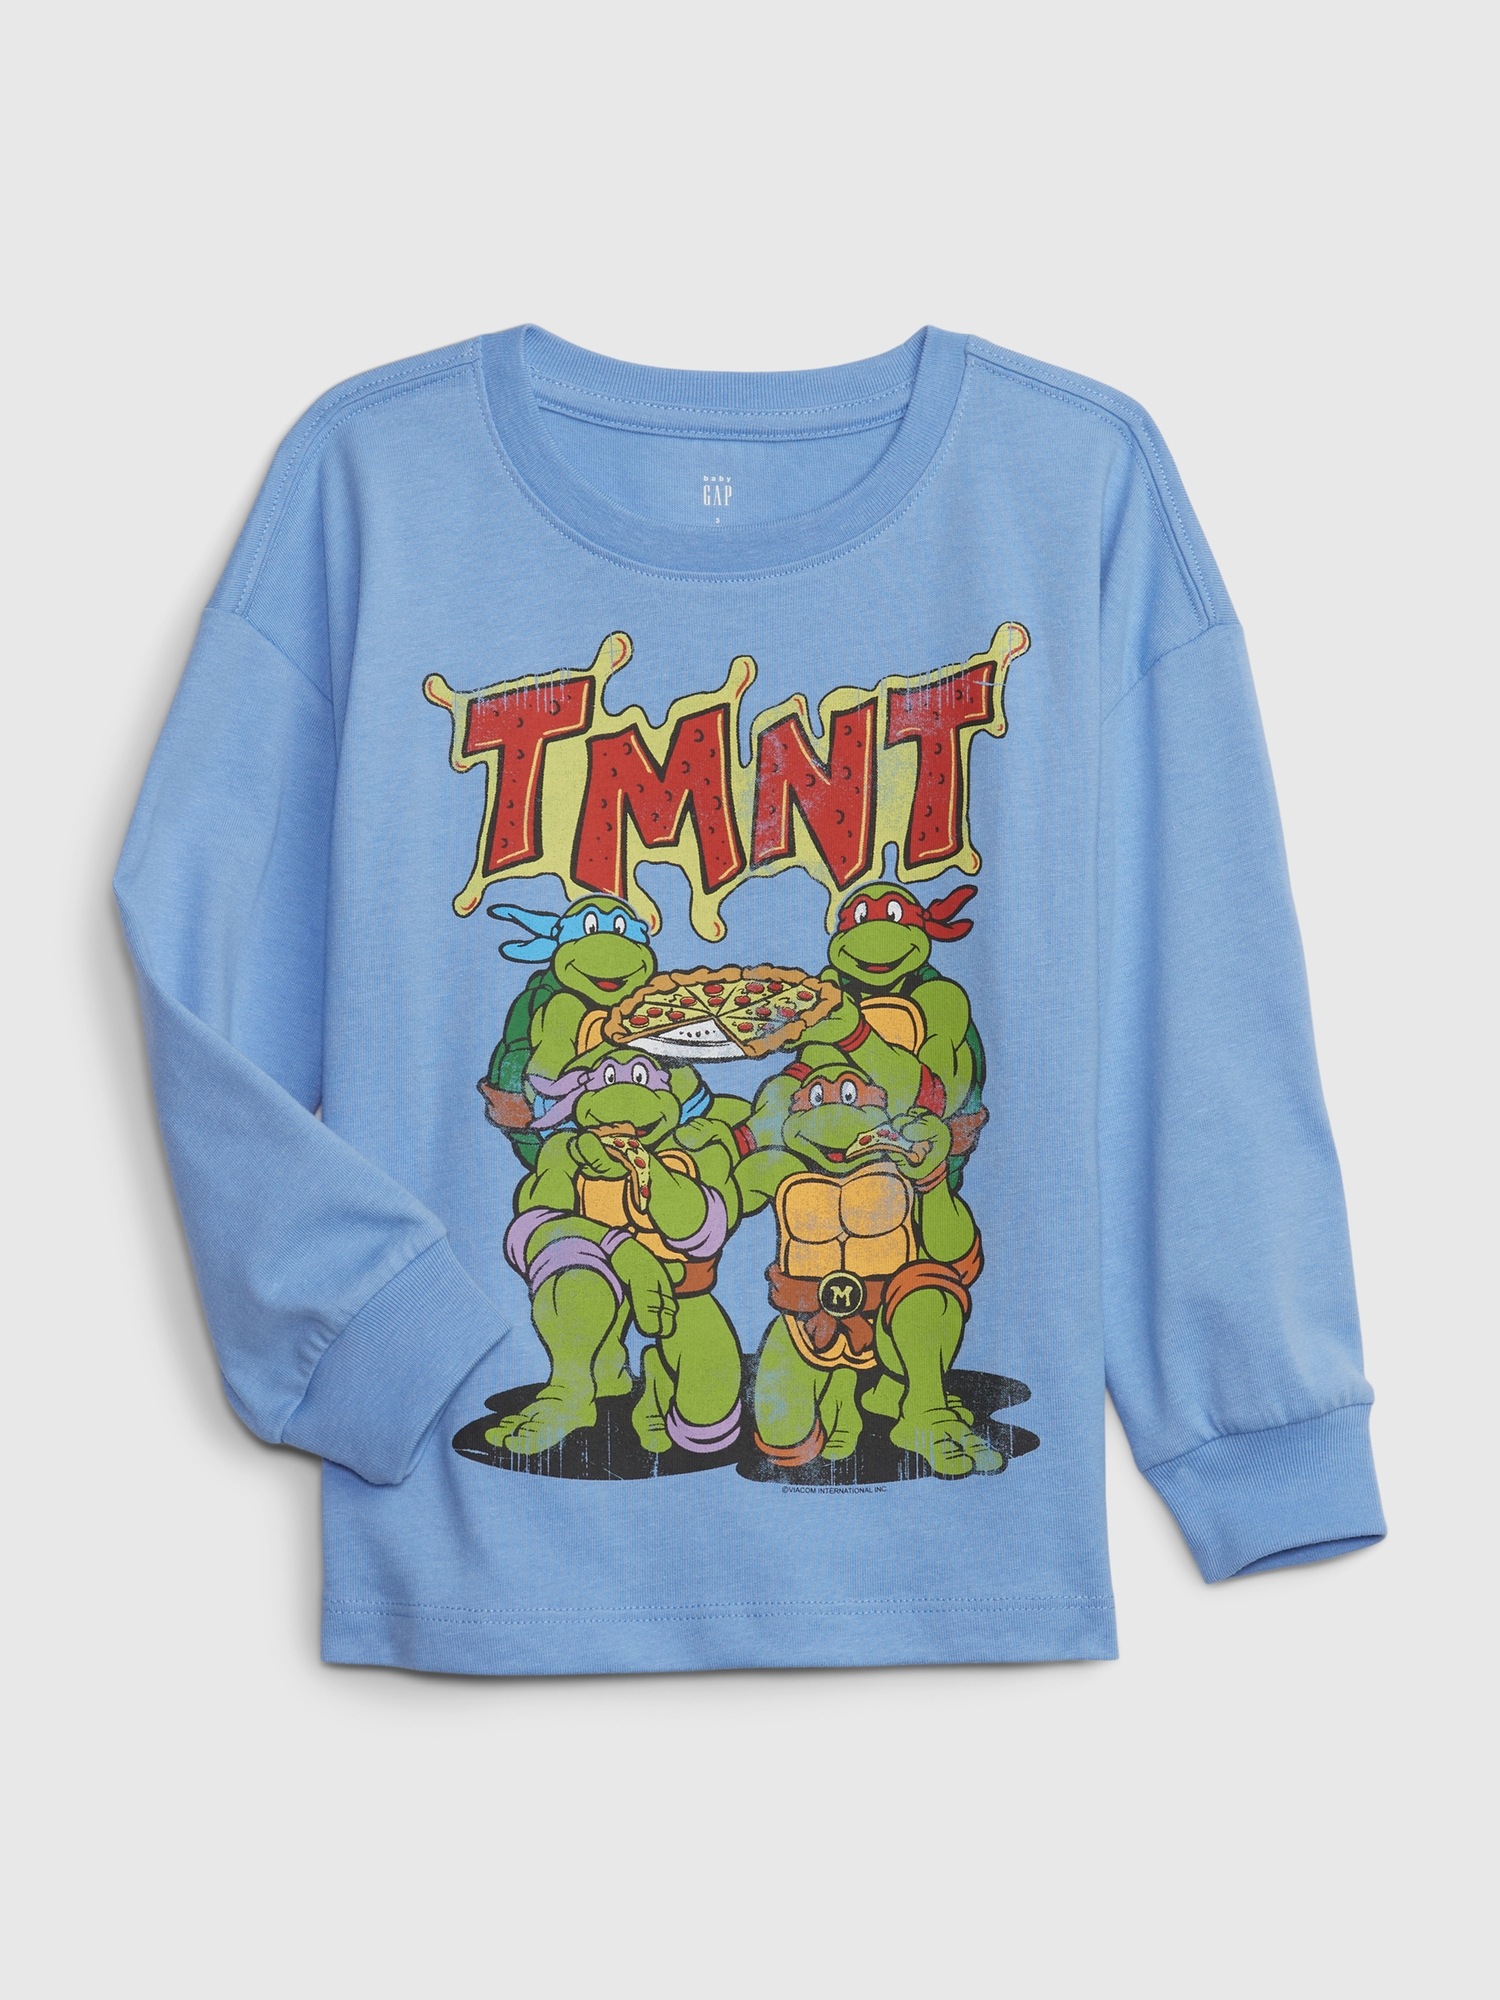 Toddler Teenage Mutant Ninja Turtles Graphic T-Shirt